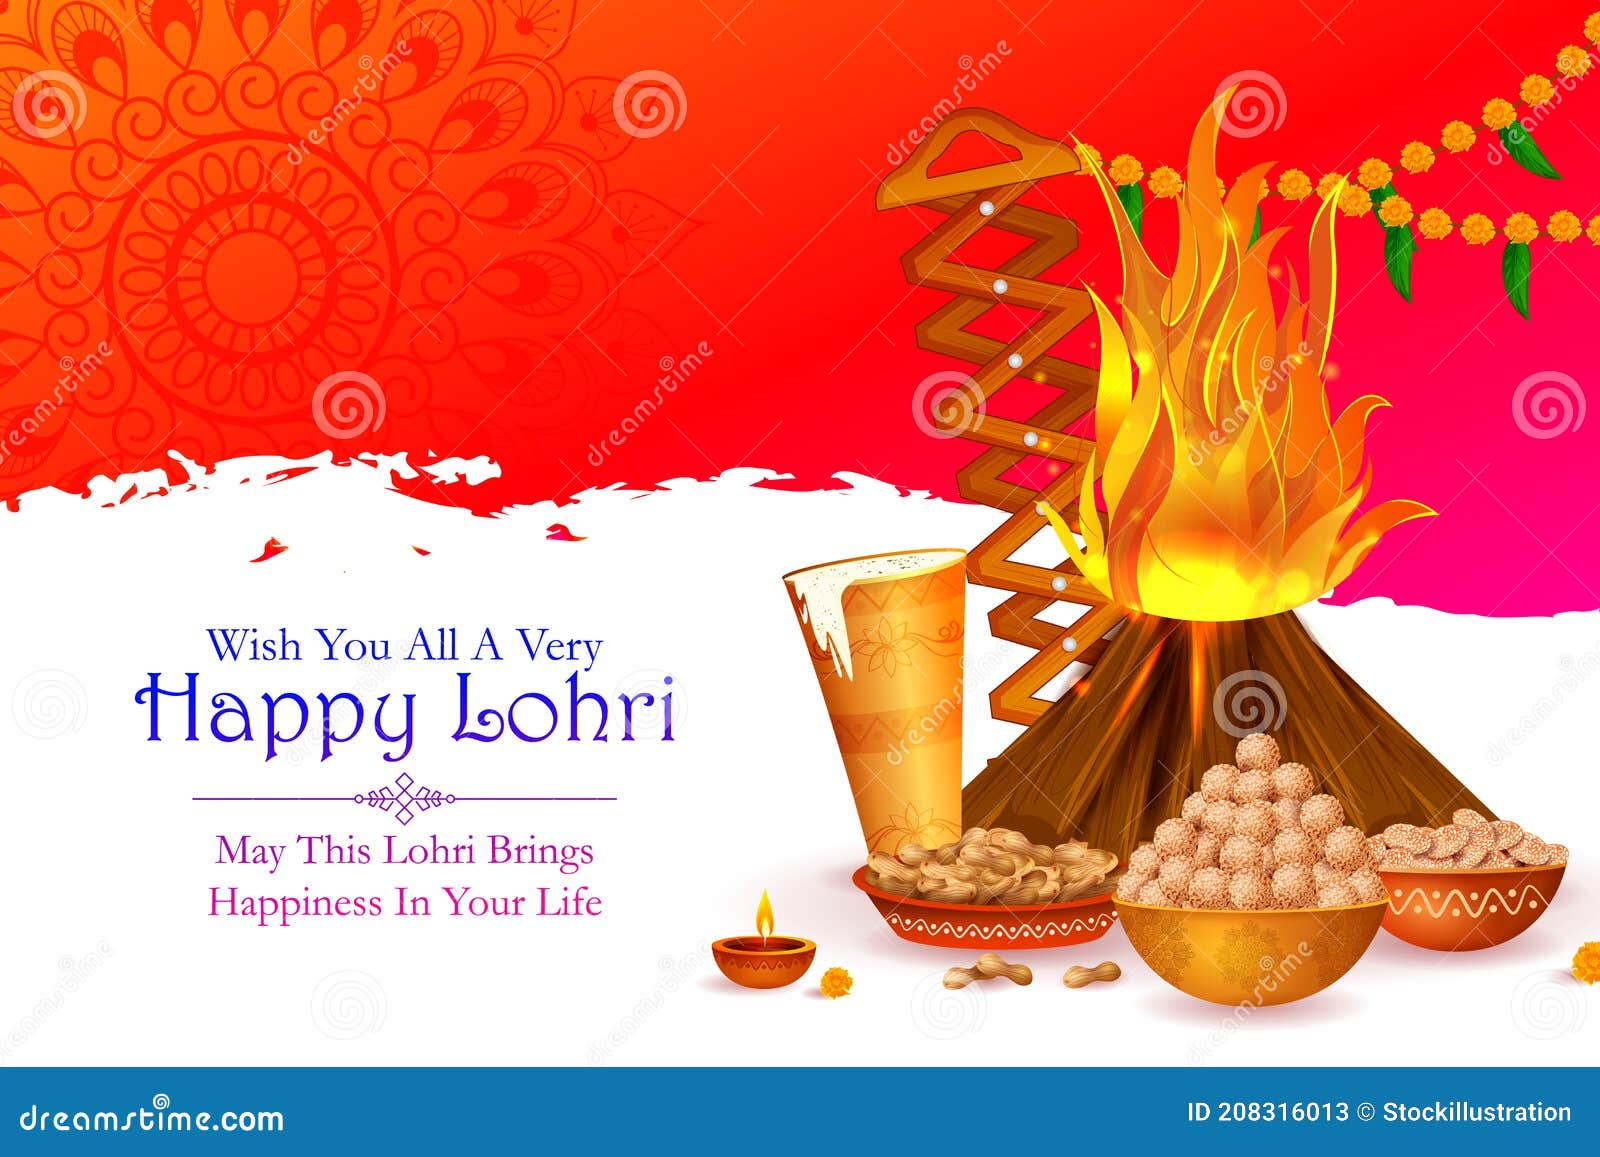 Happy Lohri Punjabi Religious Holiday Background for Harvesting Festival of  India Stock Vector - Illustration of celebration, greeting: 208316013